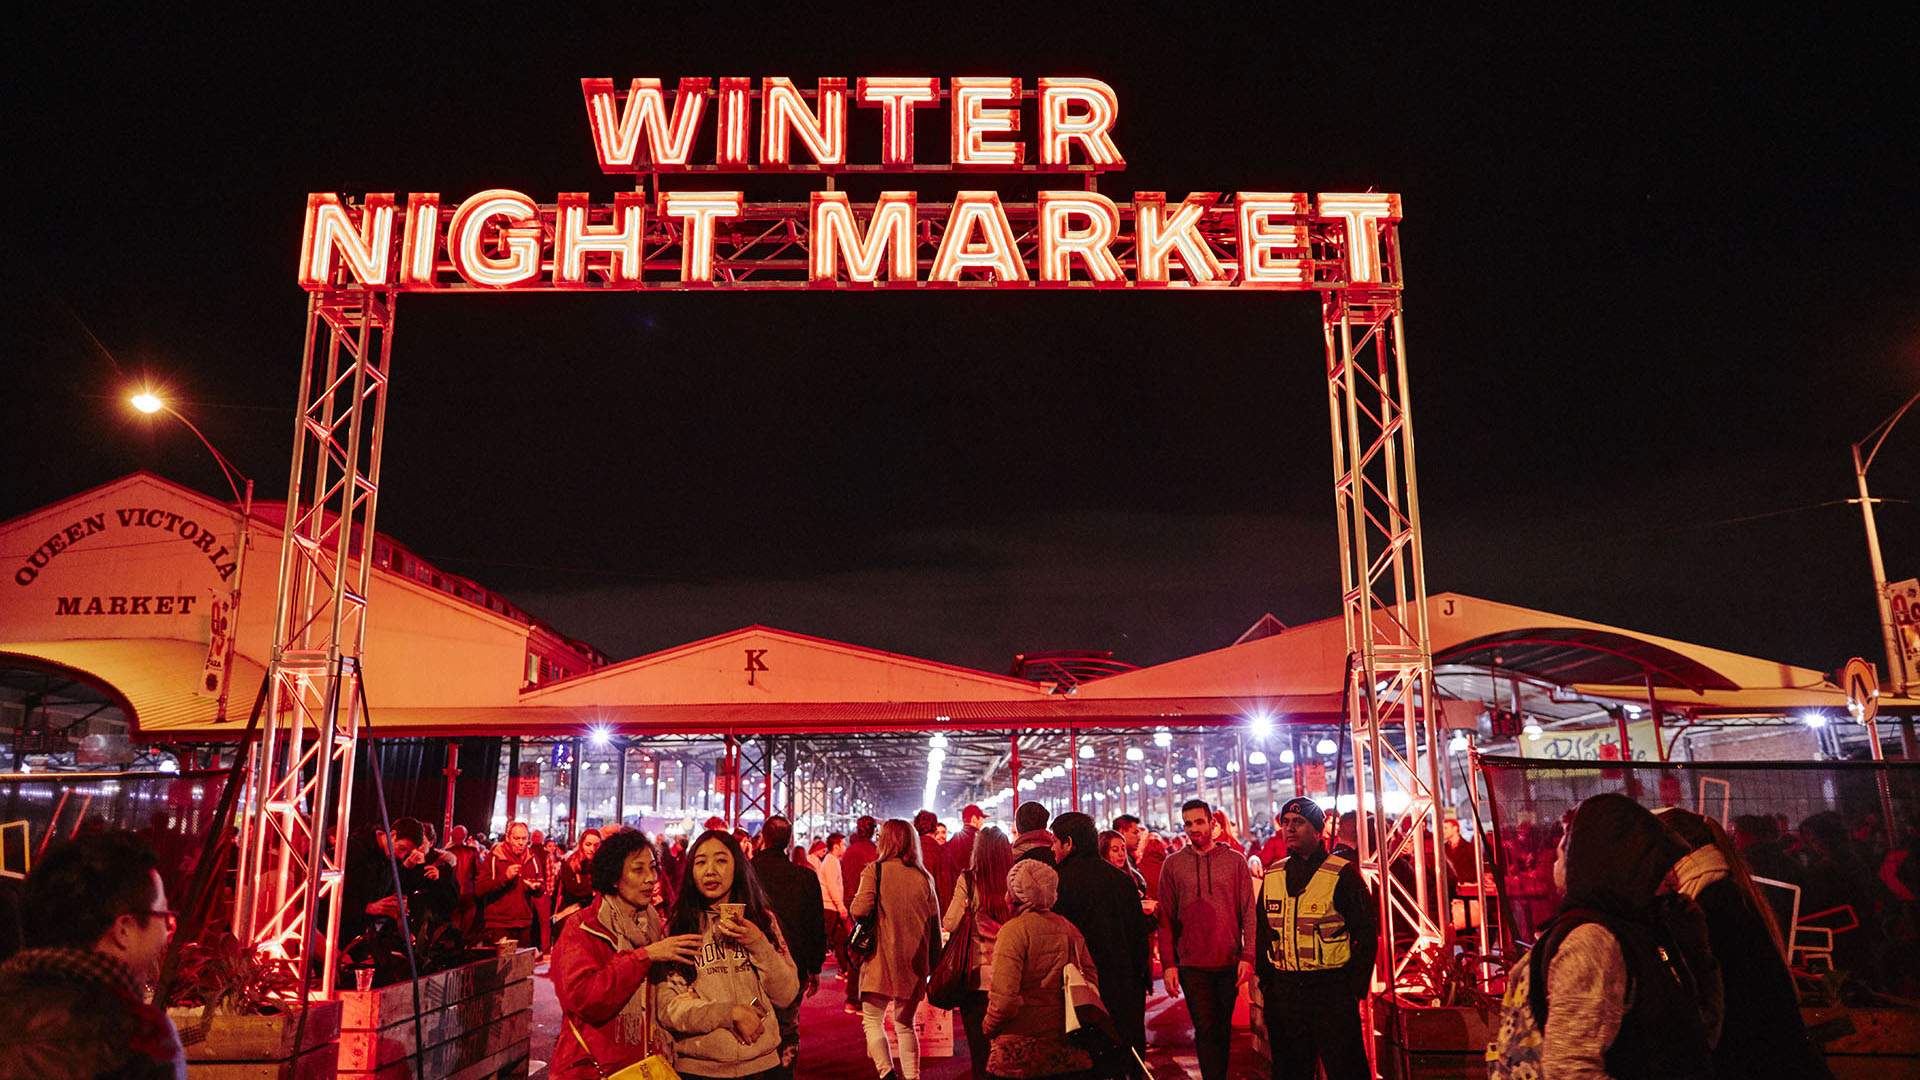 Queen Victoria Winter Night Market 2018